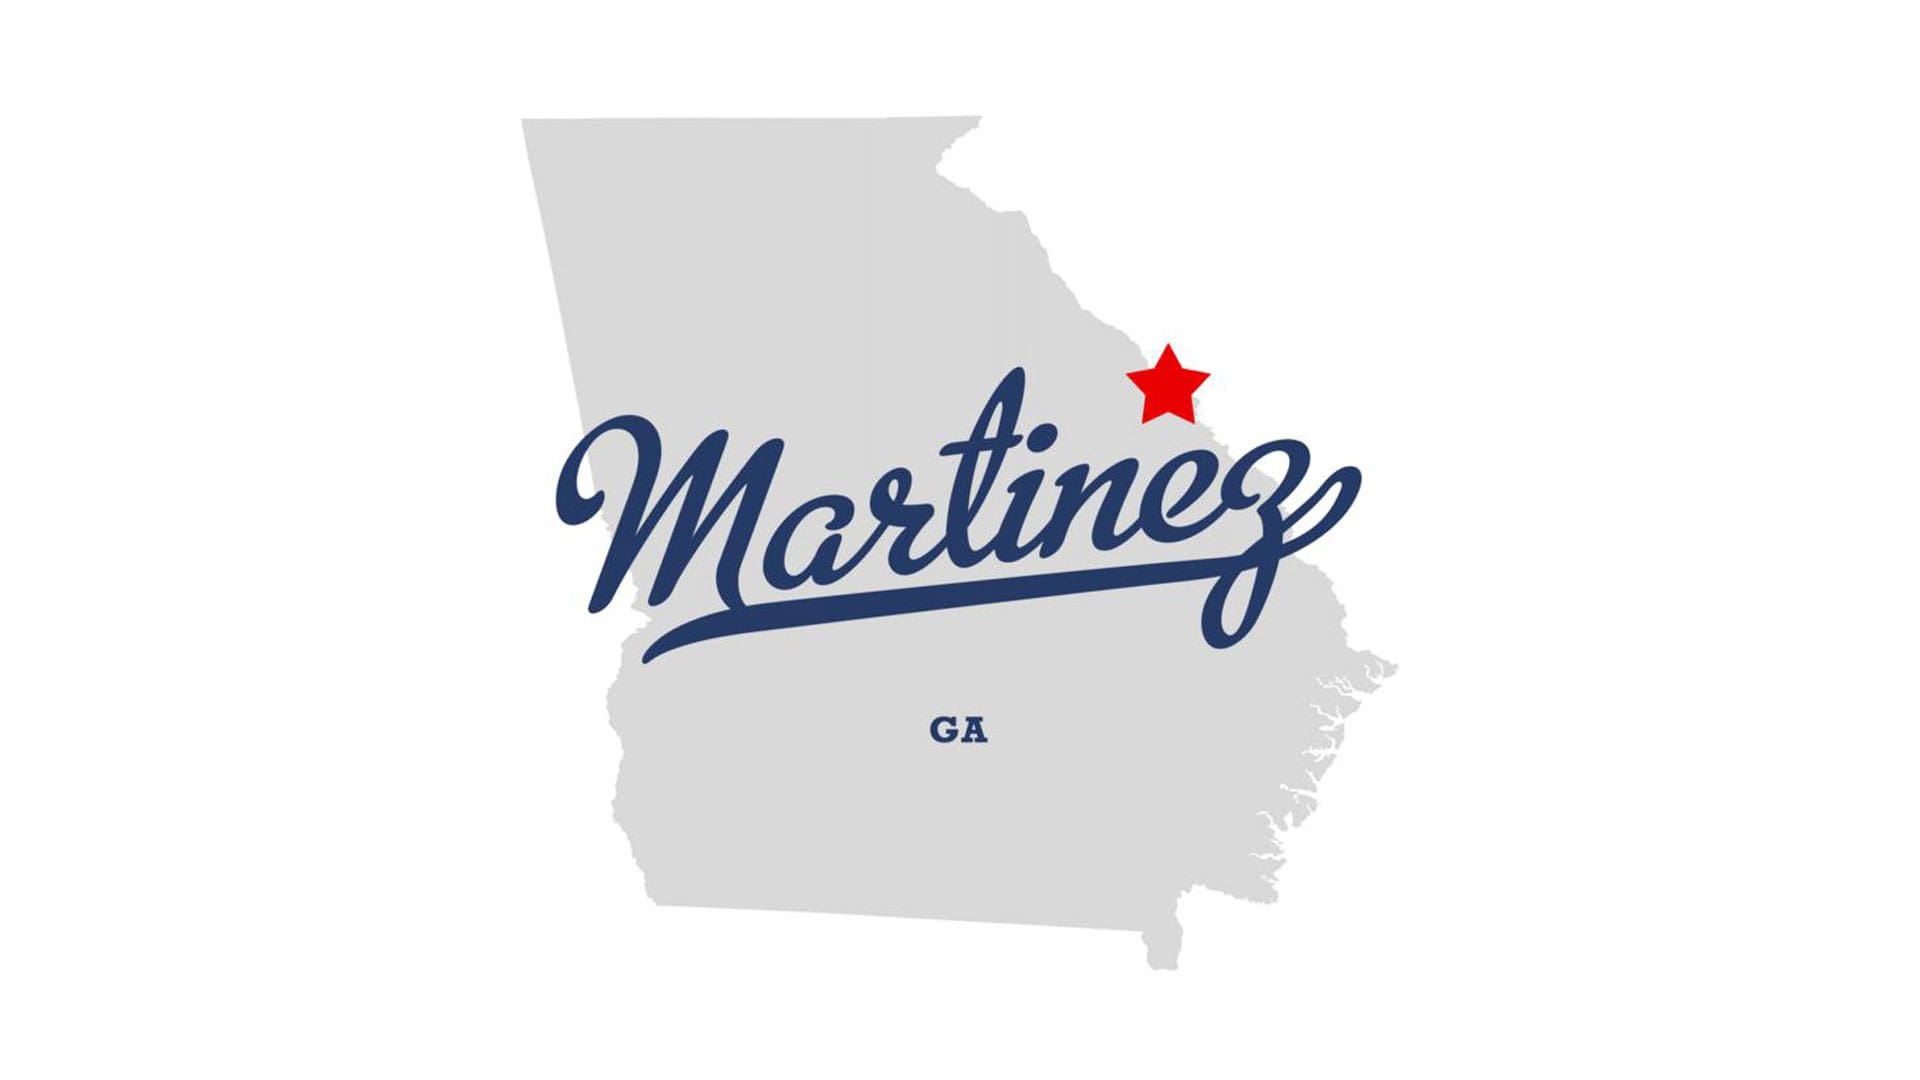 Martinez, Georgia Location